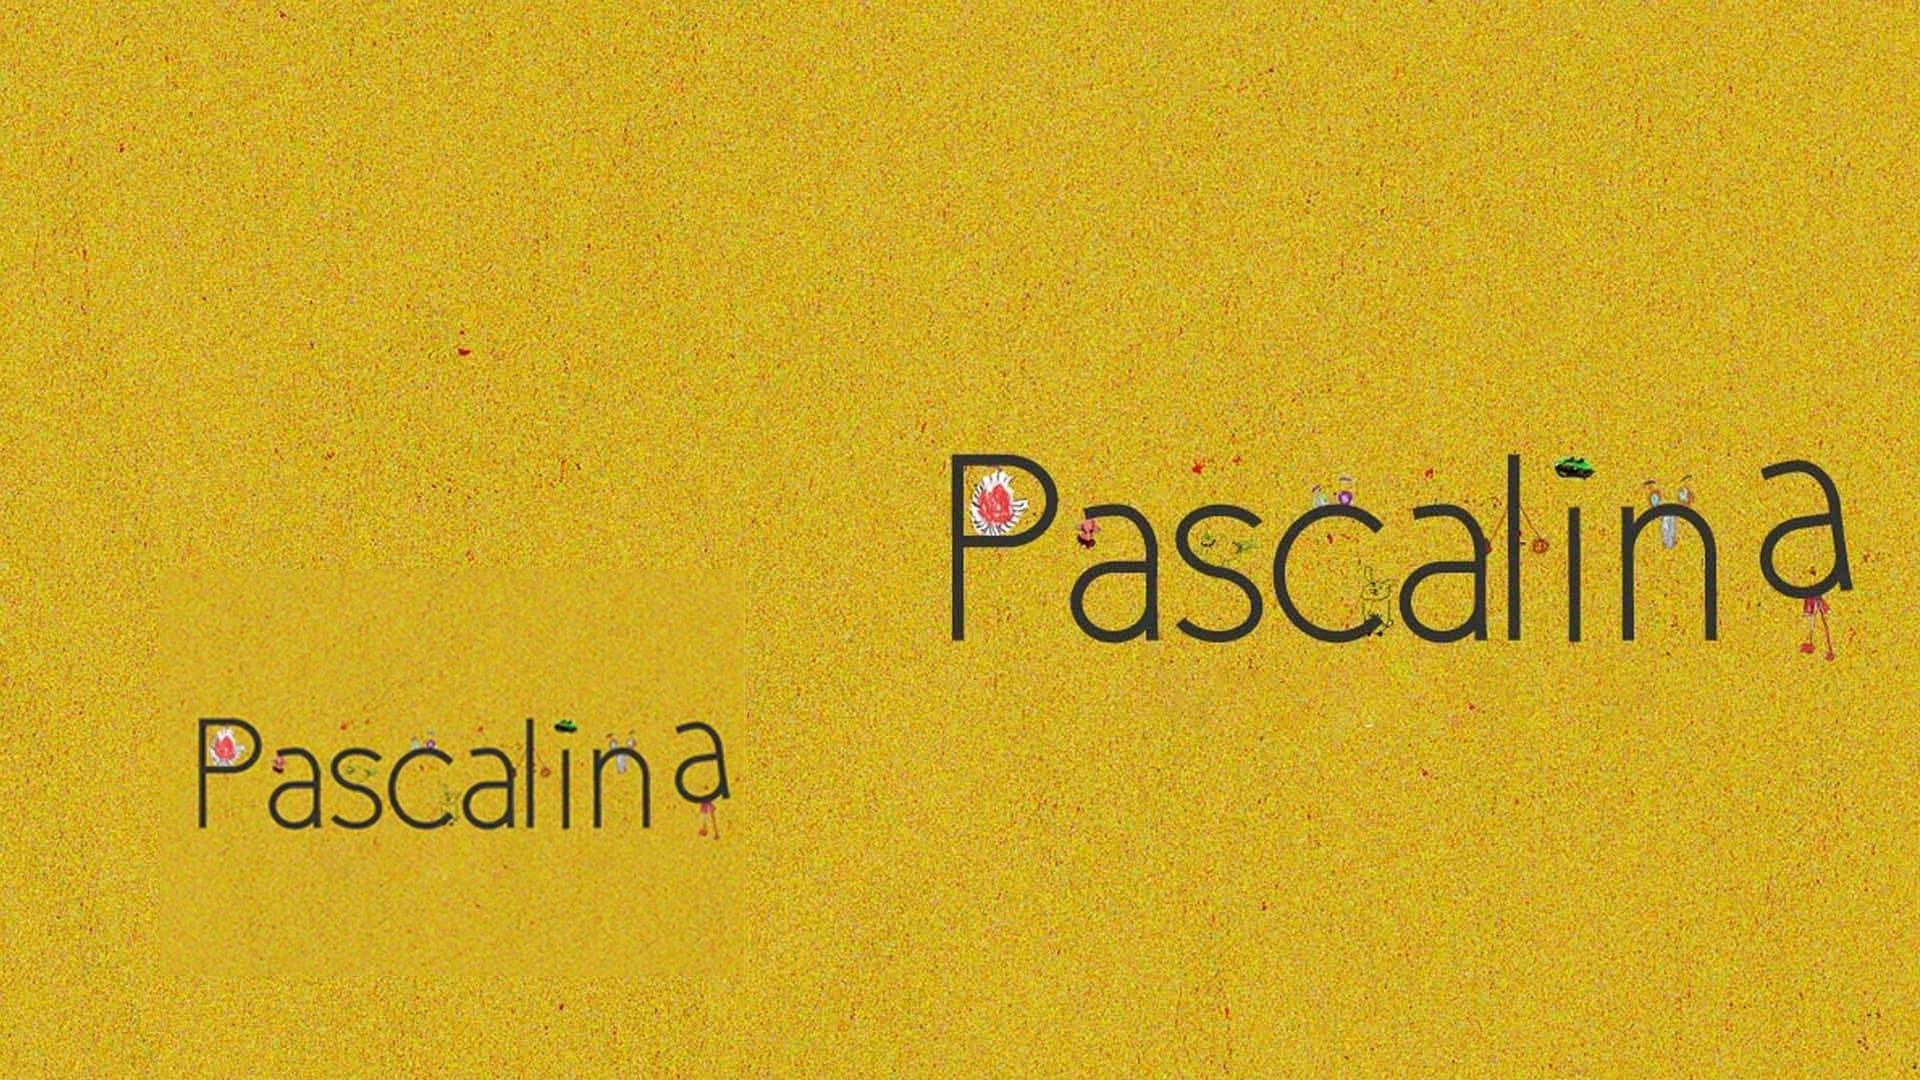 Pascalina backdrop